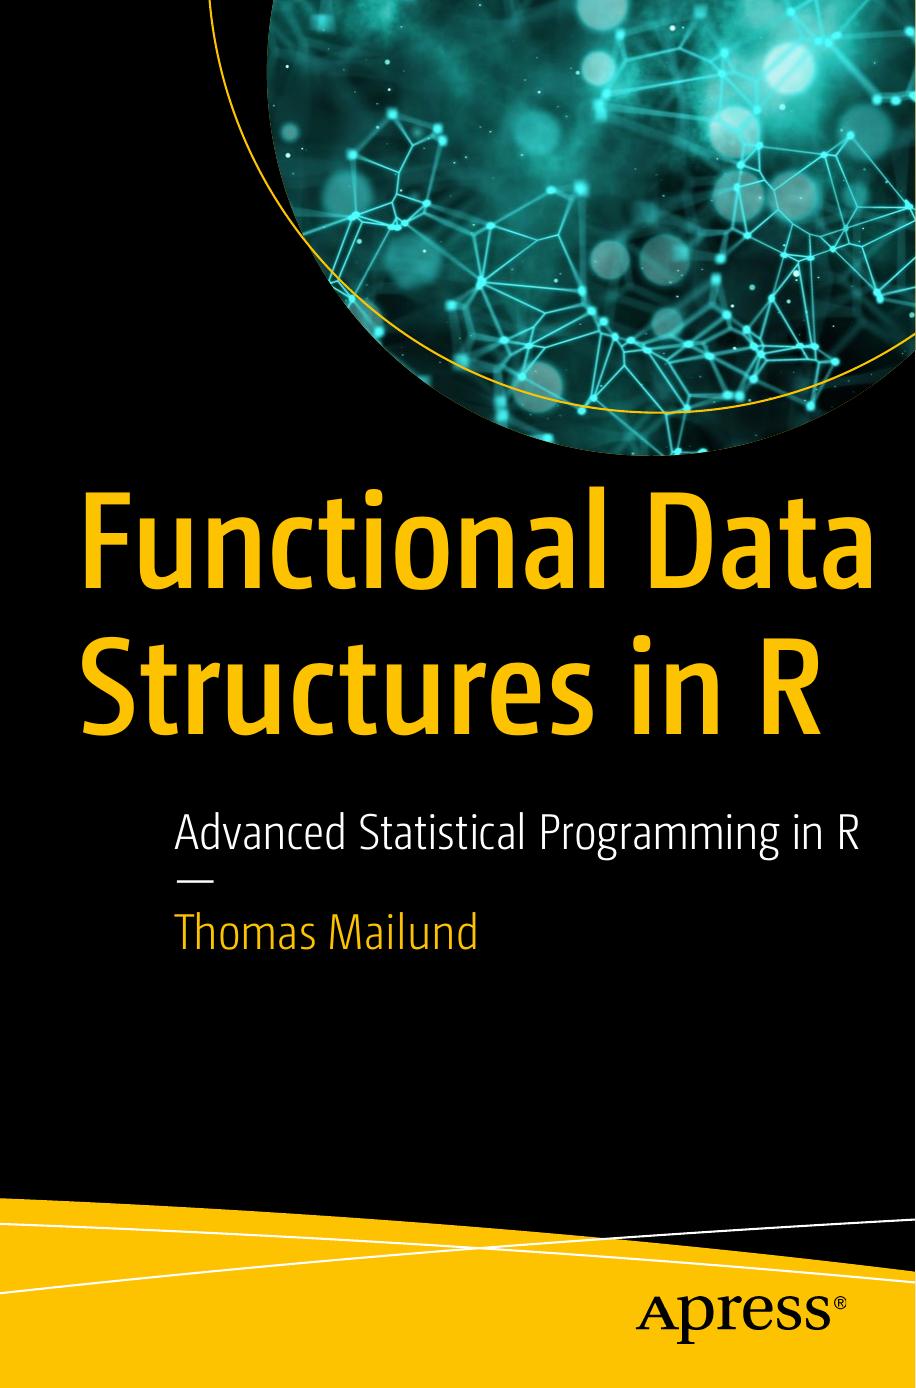 Mailund Functional Data Structures In R 2017